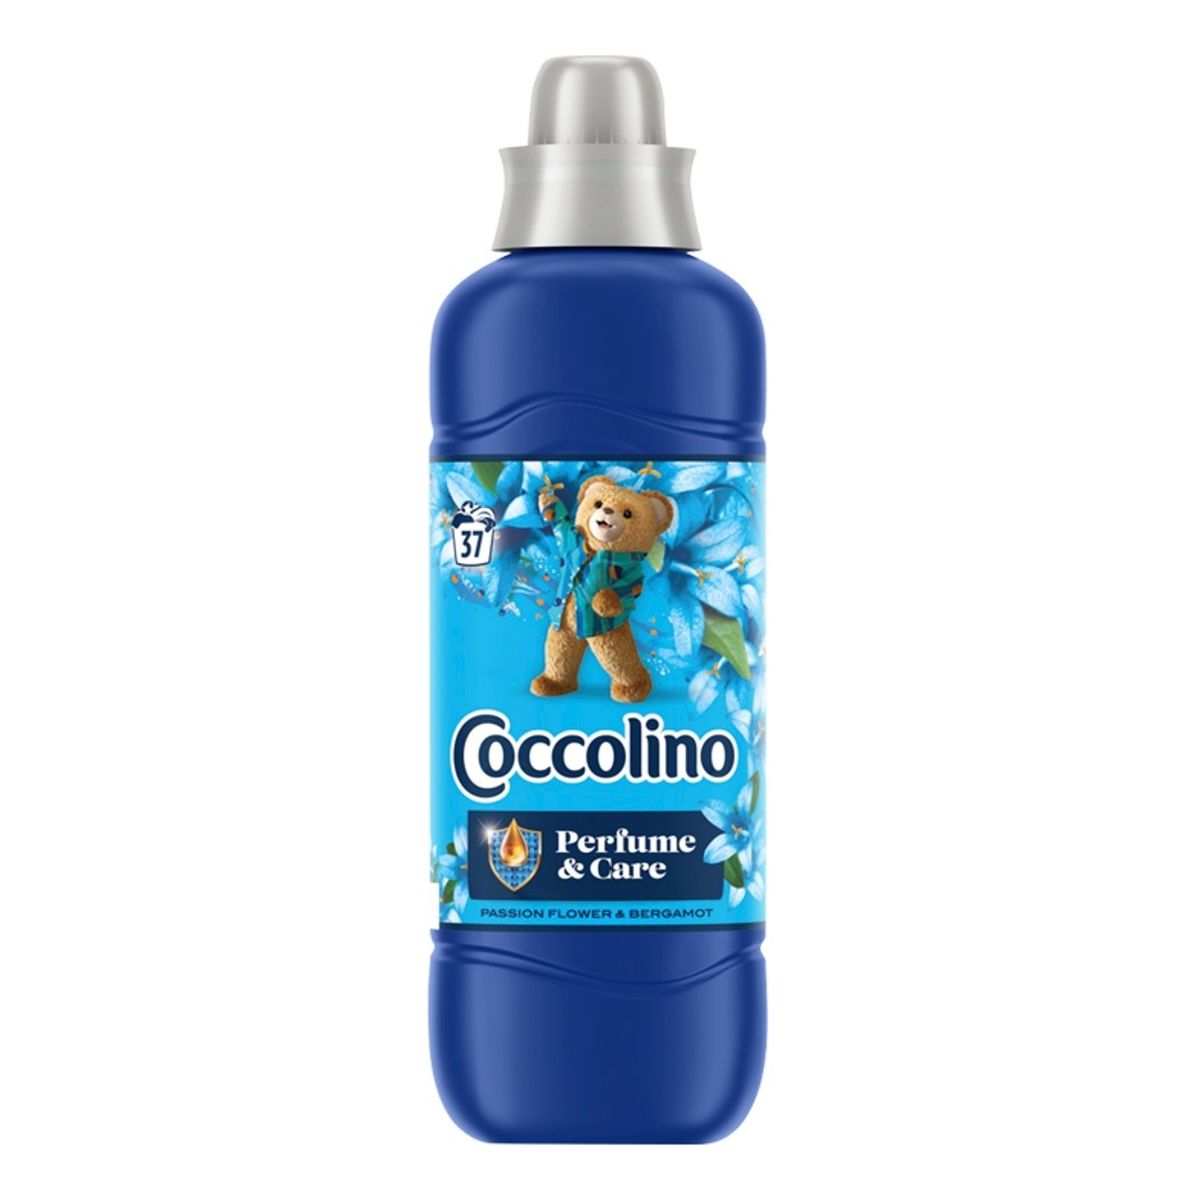 Coccolino Perfume & Care Płyn do płukania tkanin Passion Flower&Bergamot (37 prań) 925ml